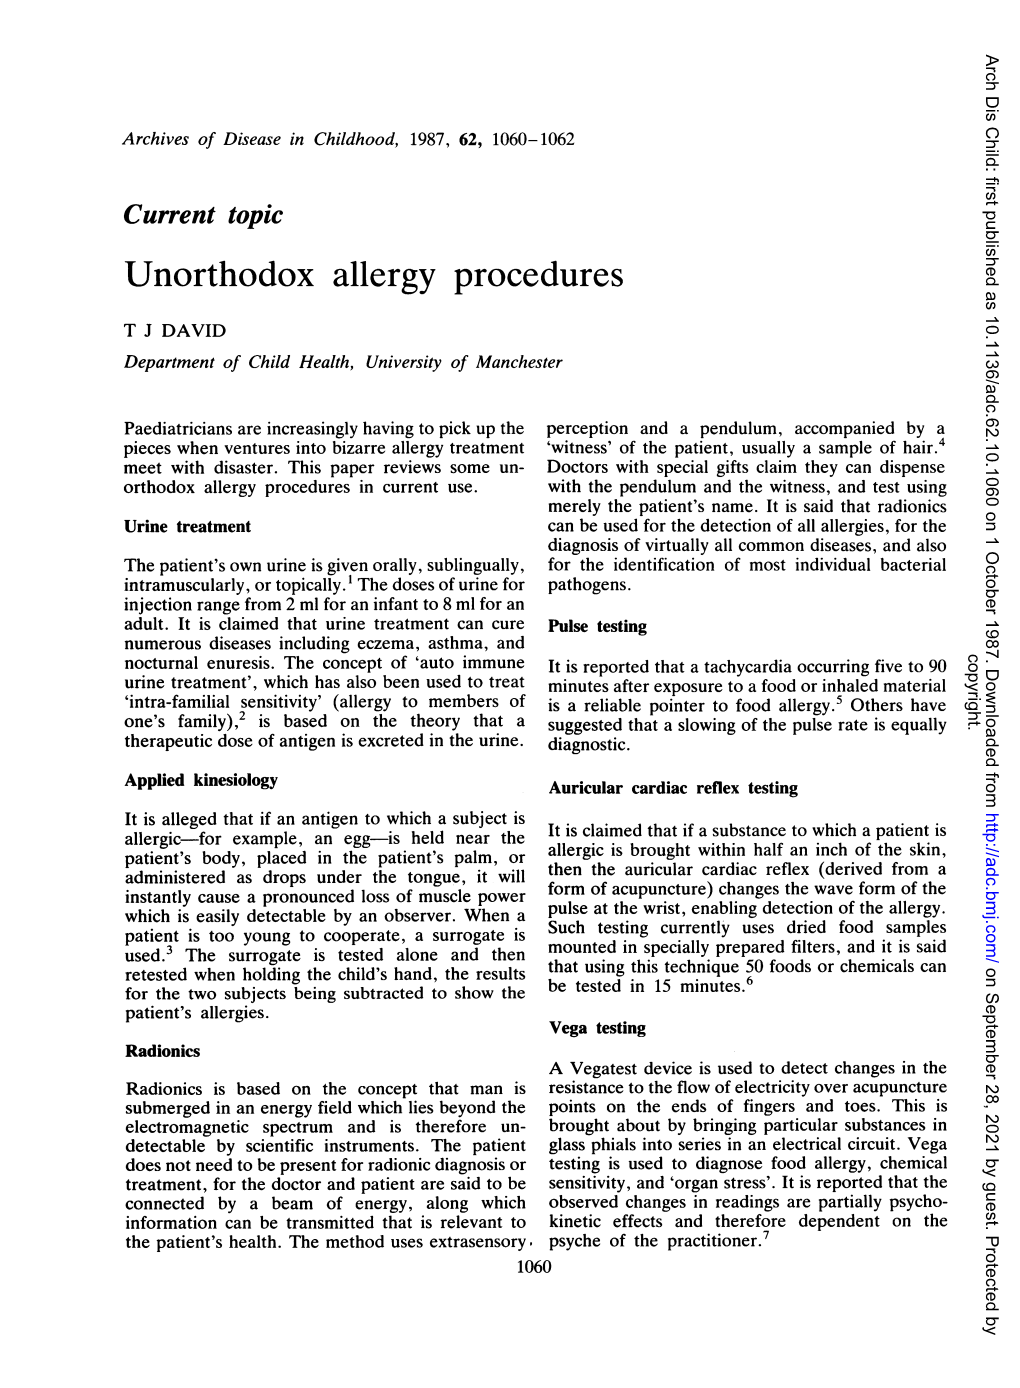 Unorthodox Allergy Procedures